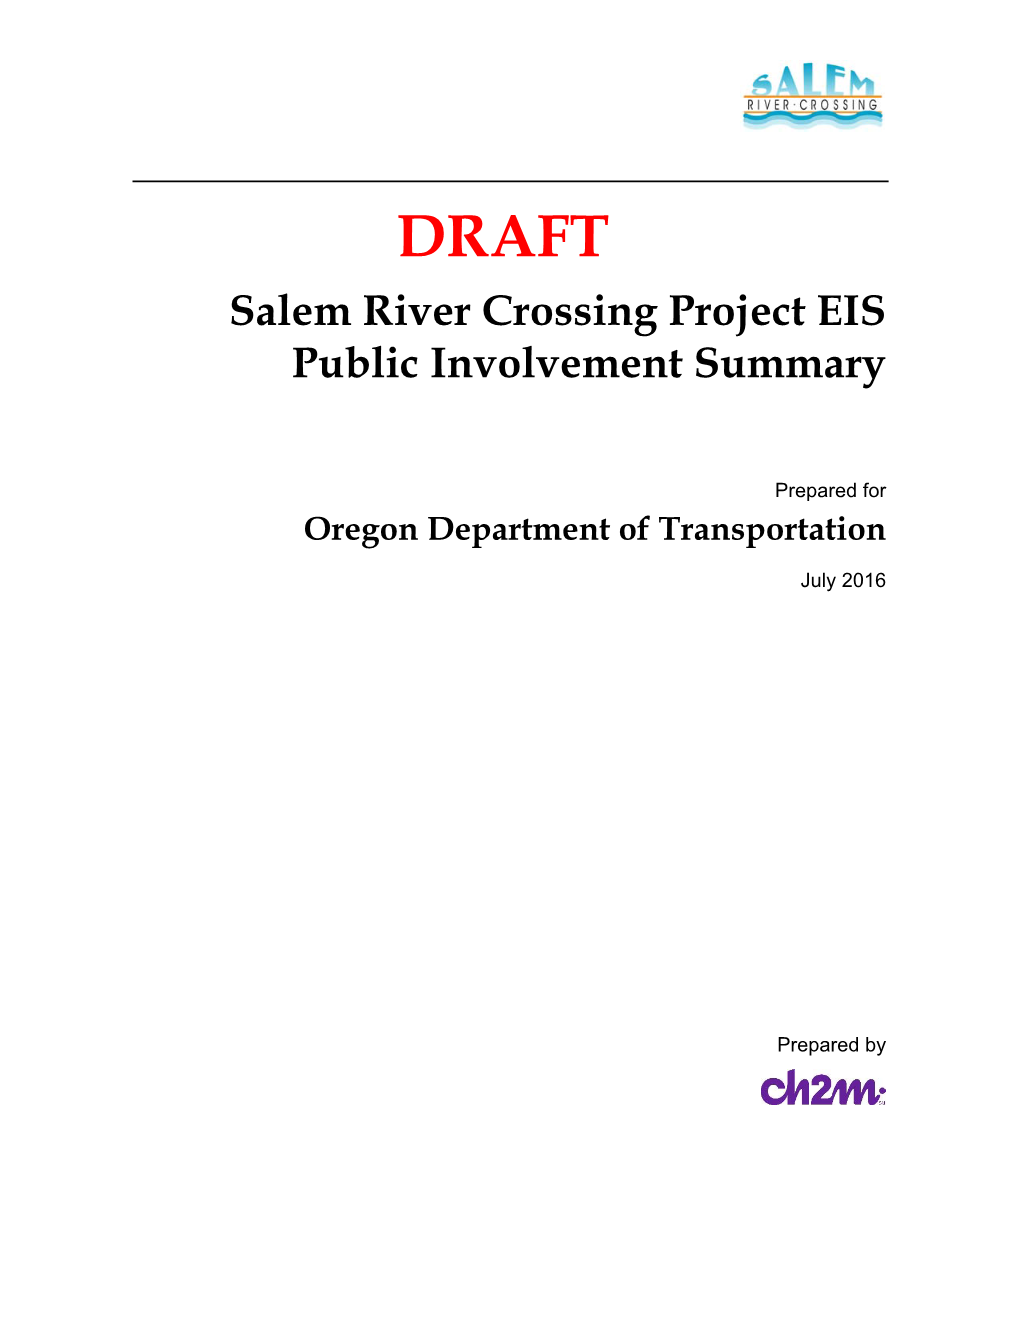 Salem River Crossing Project EIS Public Involvement Summary